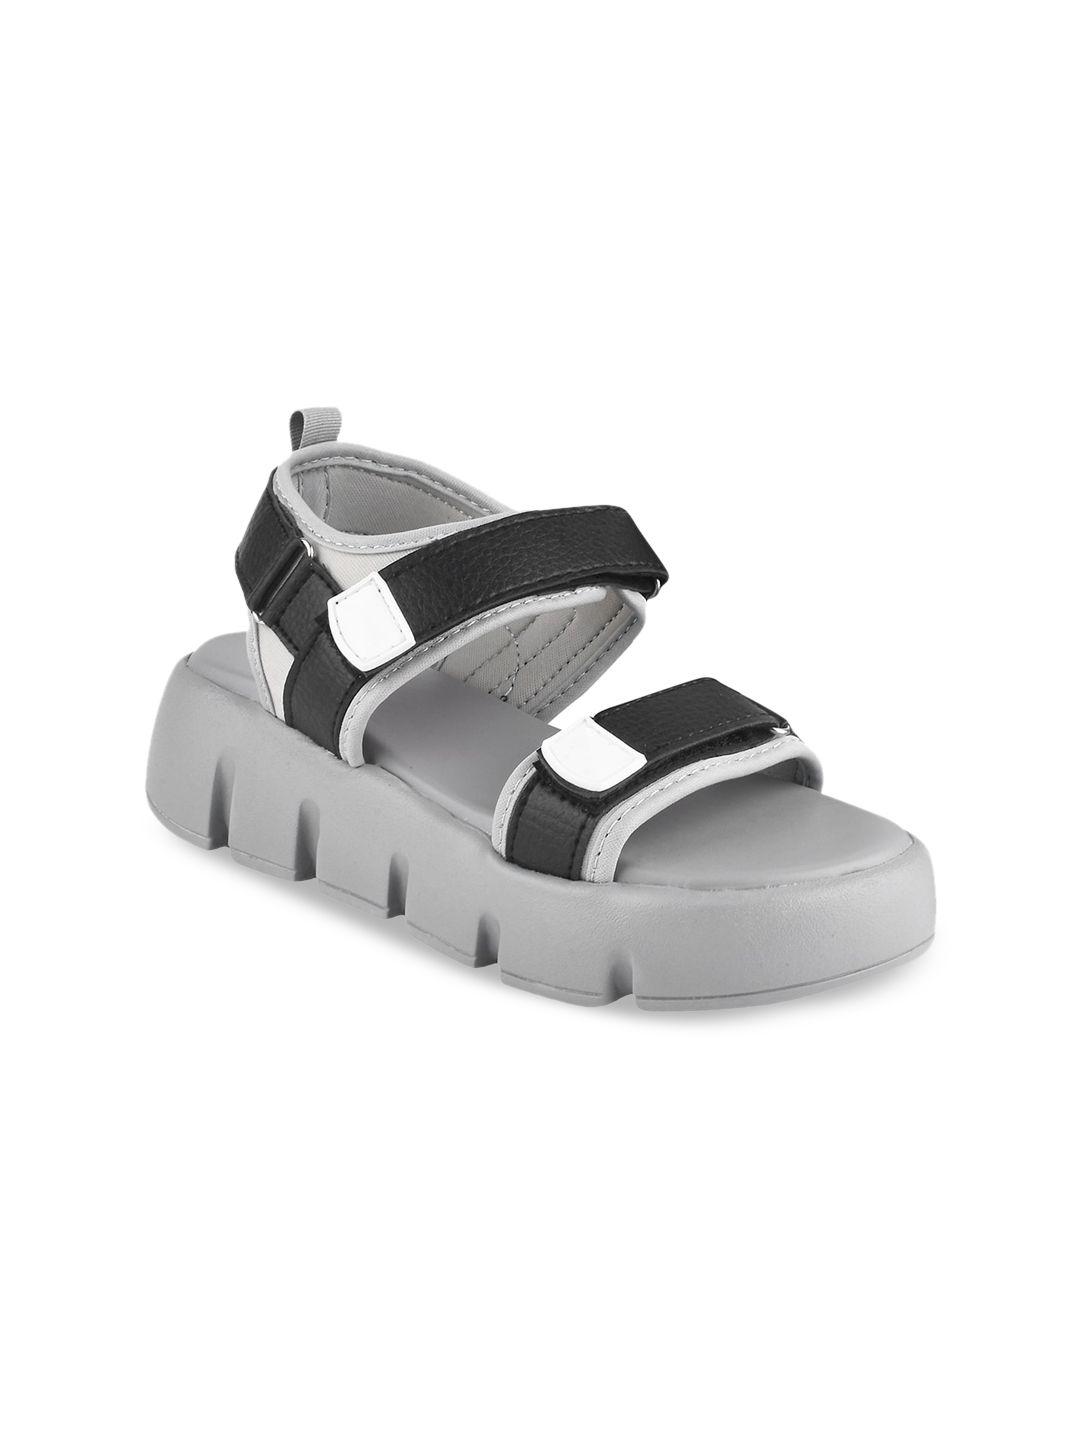 shoetopia black flatform sandals with buckles